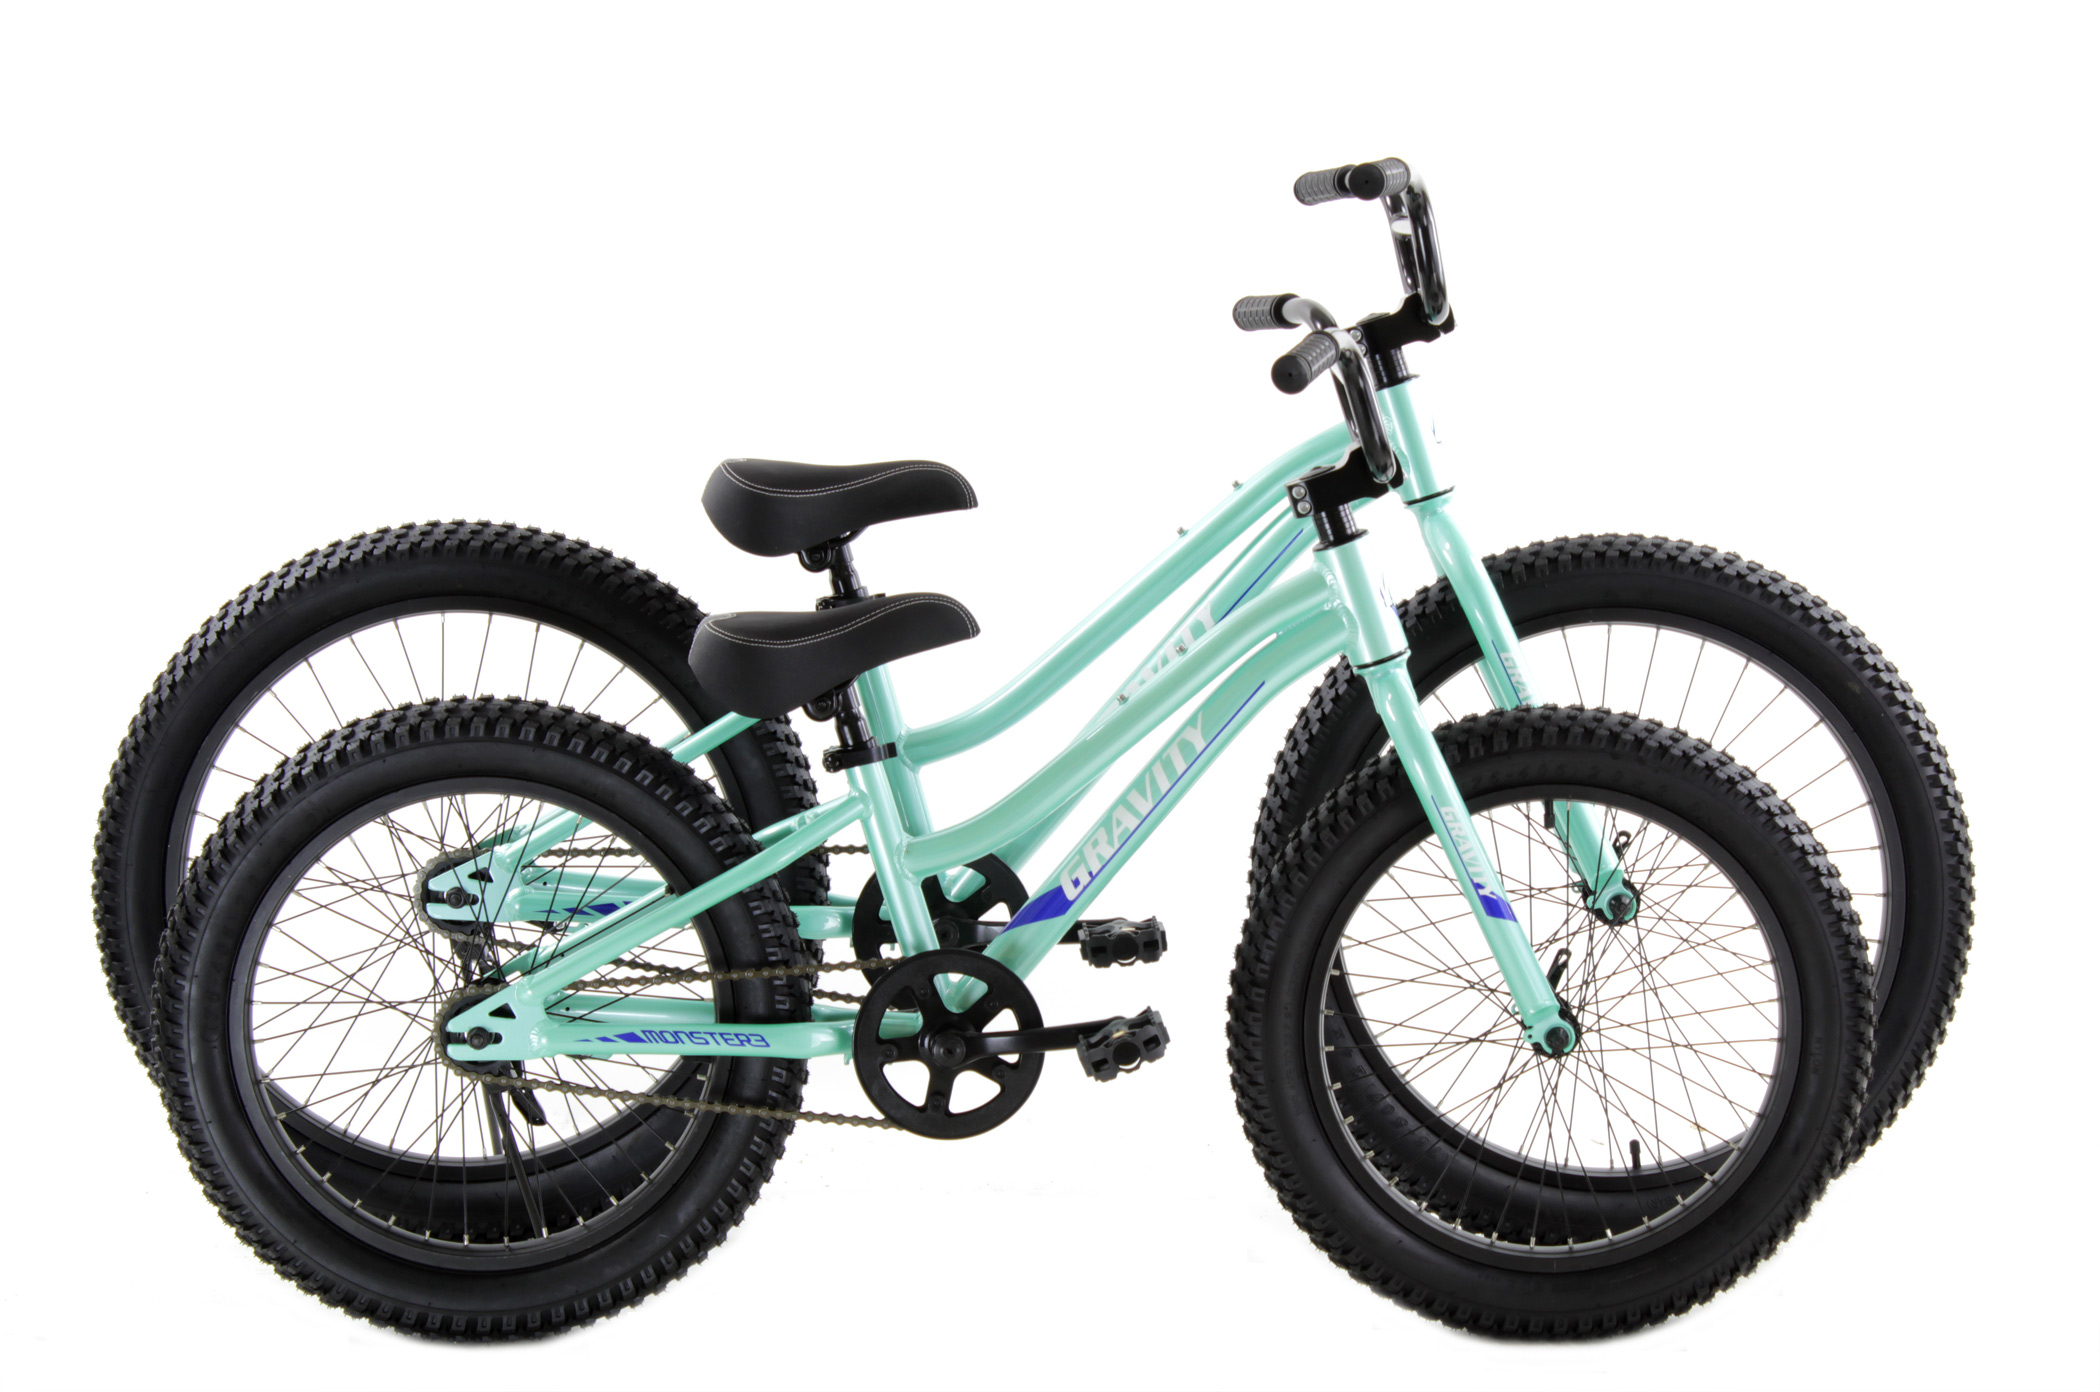 24 inch bike for girl